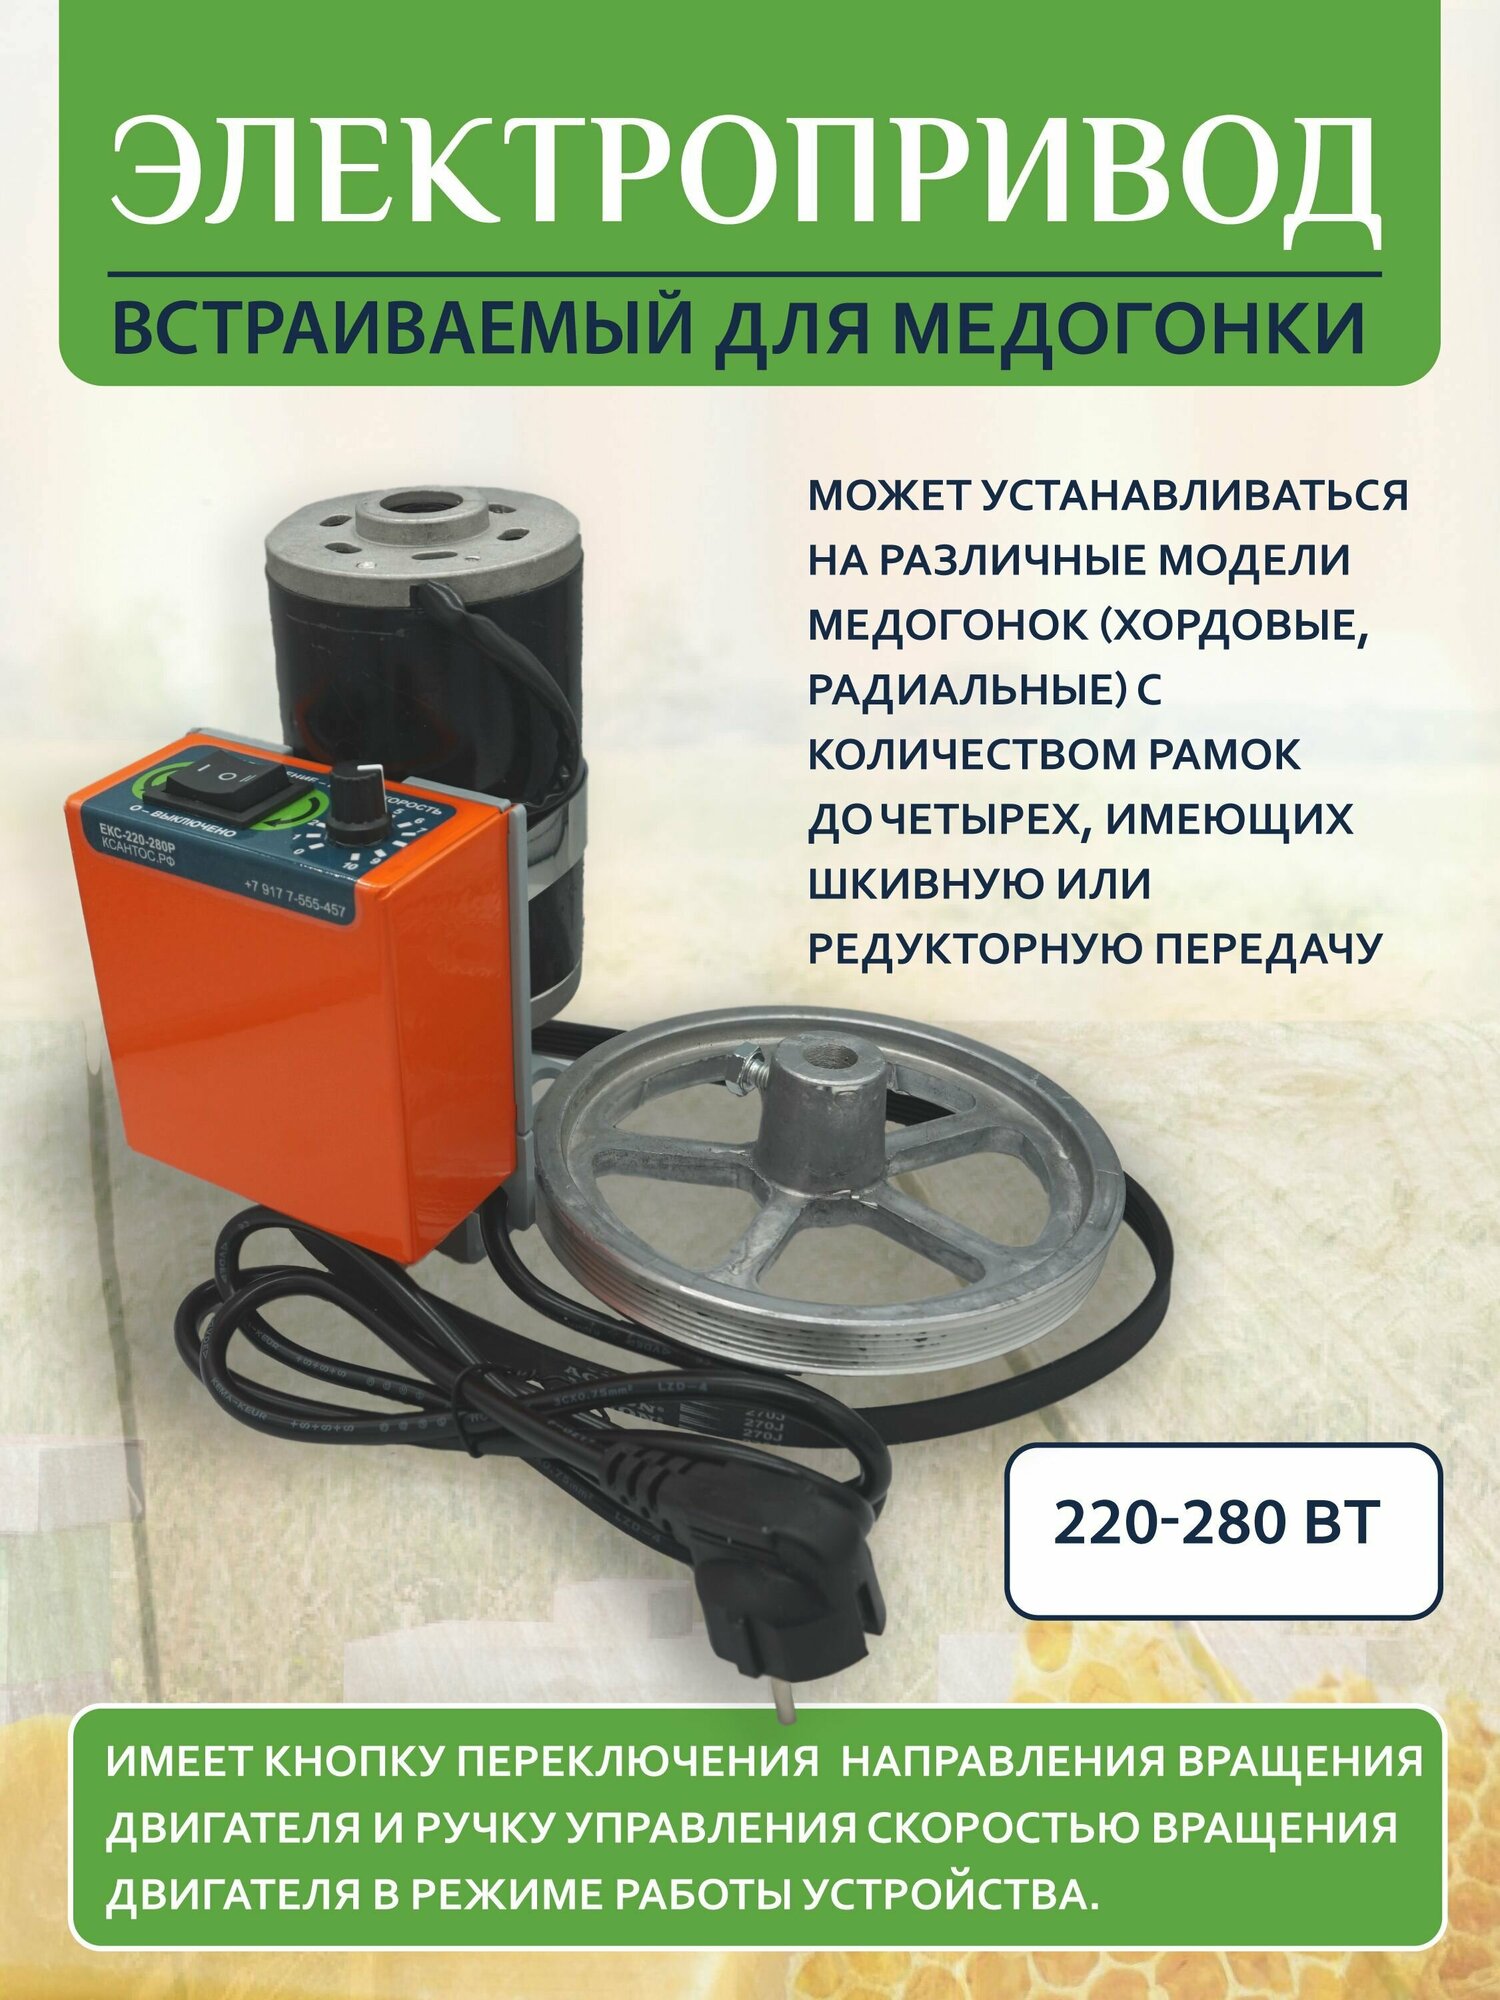 Привод медогонки электрический ЕКС-220V-280W